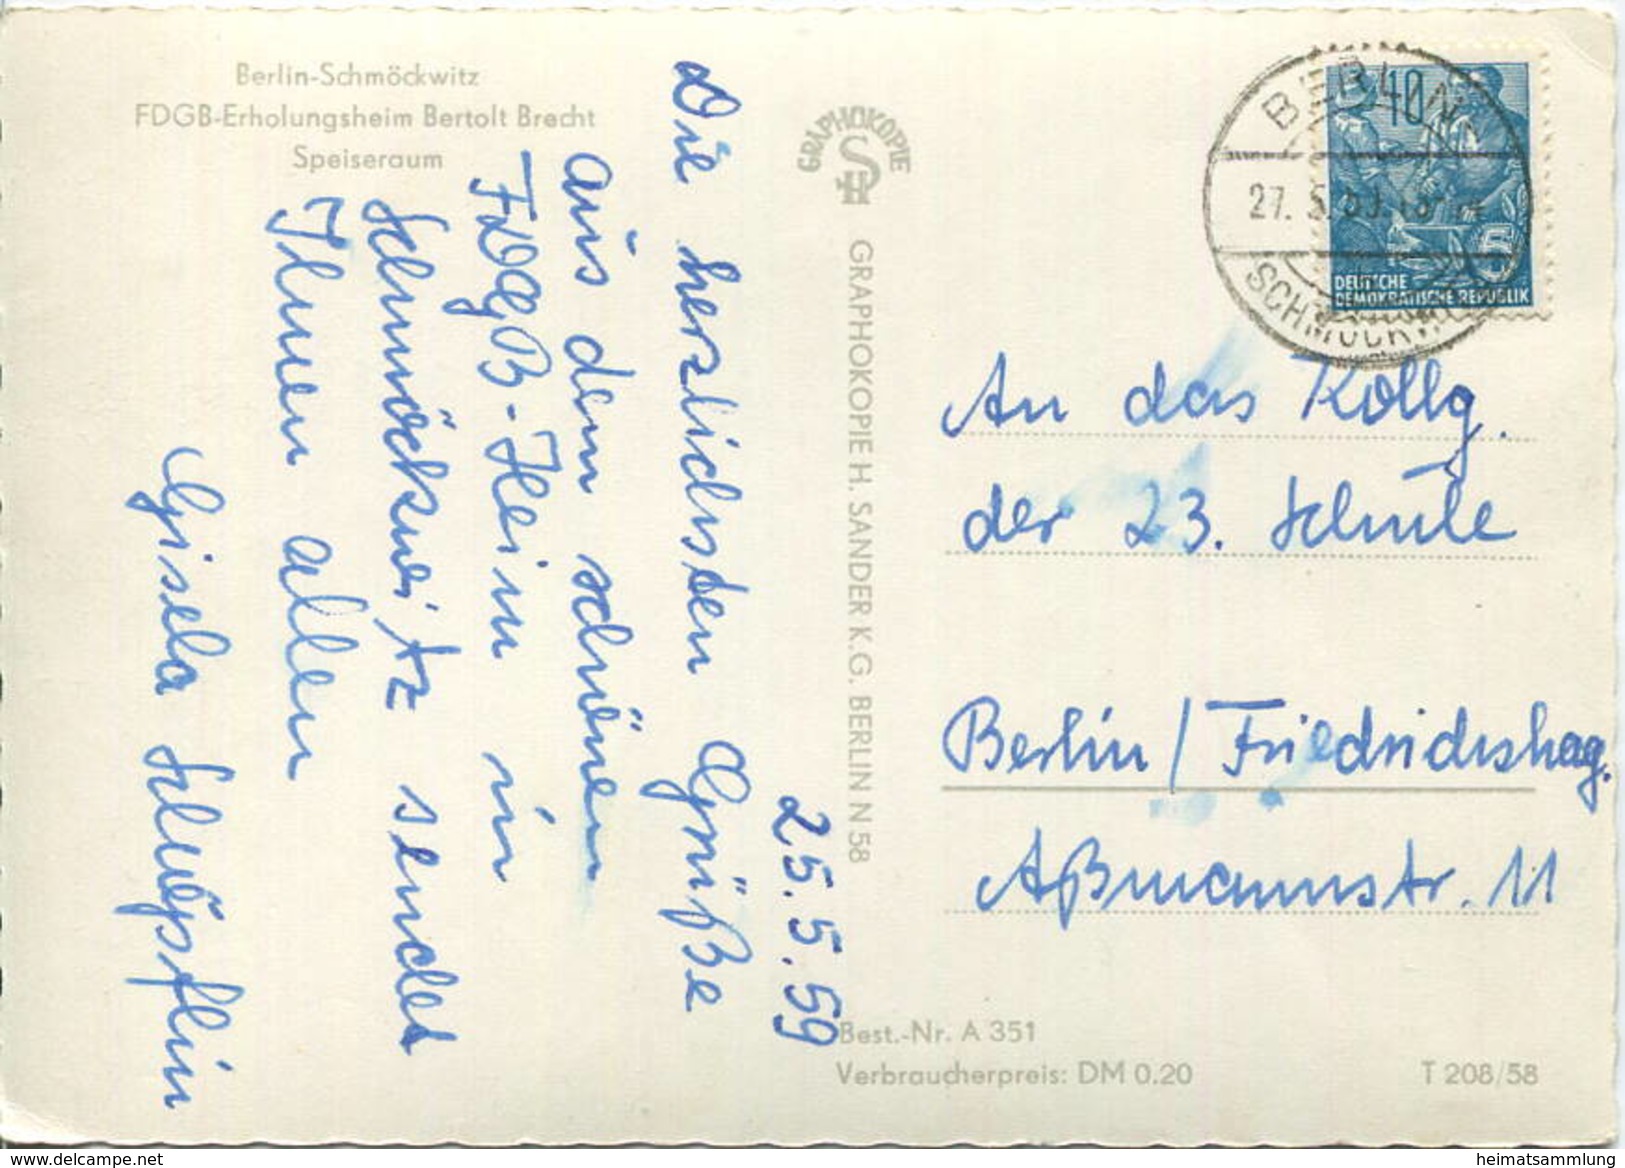 Berlin - Schmöckwitz - FDGB-Erholungsheim Bertolt Brecht - Speiseraum - Foto-AK Grossformat 1958 - Verlag H. Sander K. G - Schmöckwitz